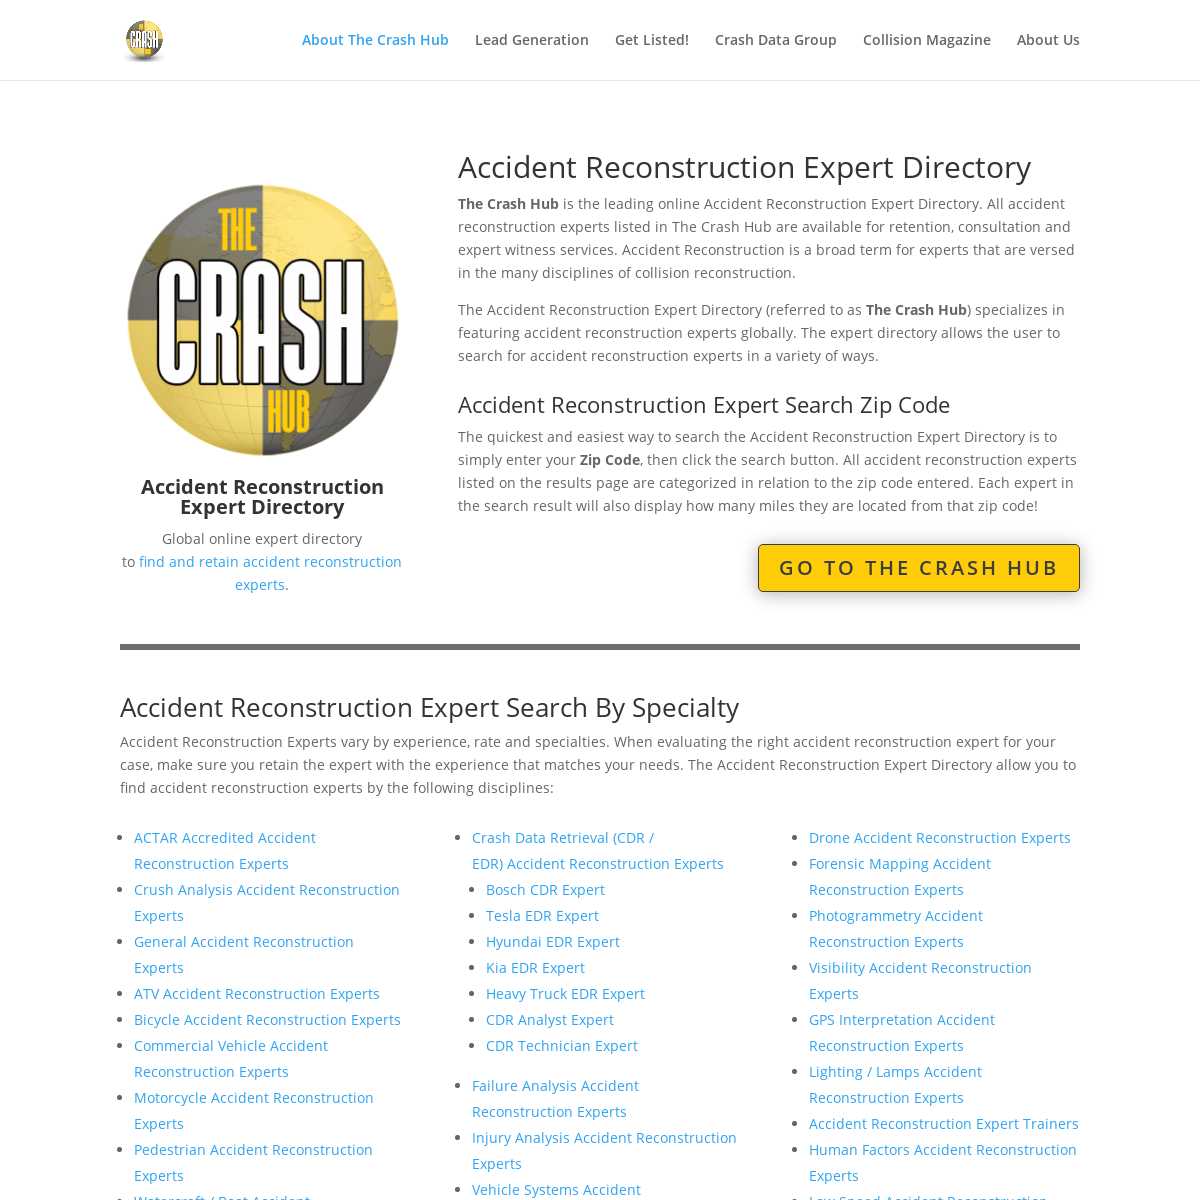 Accident Reconstruction Expert Directory - The Crash Hub